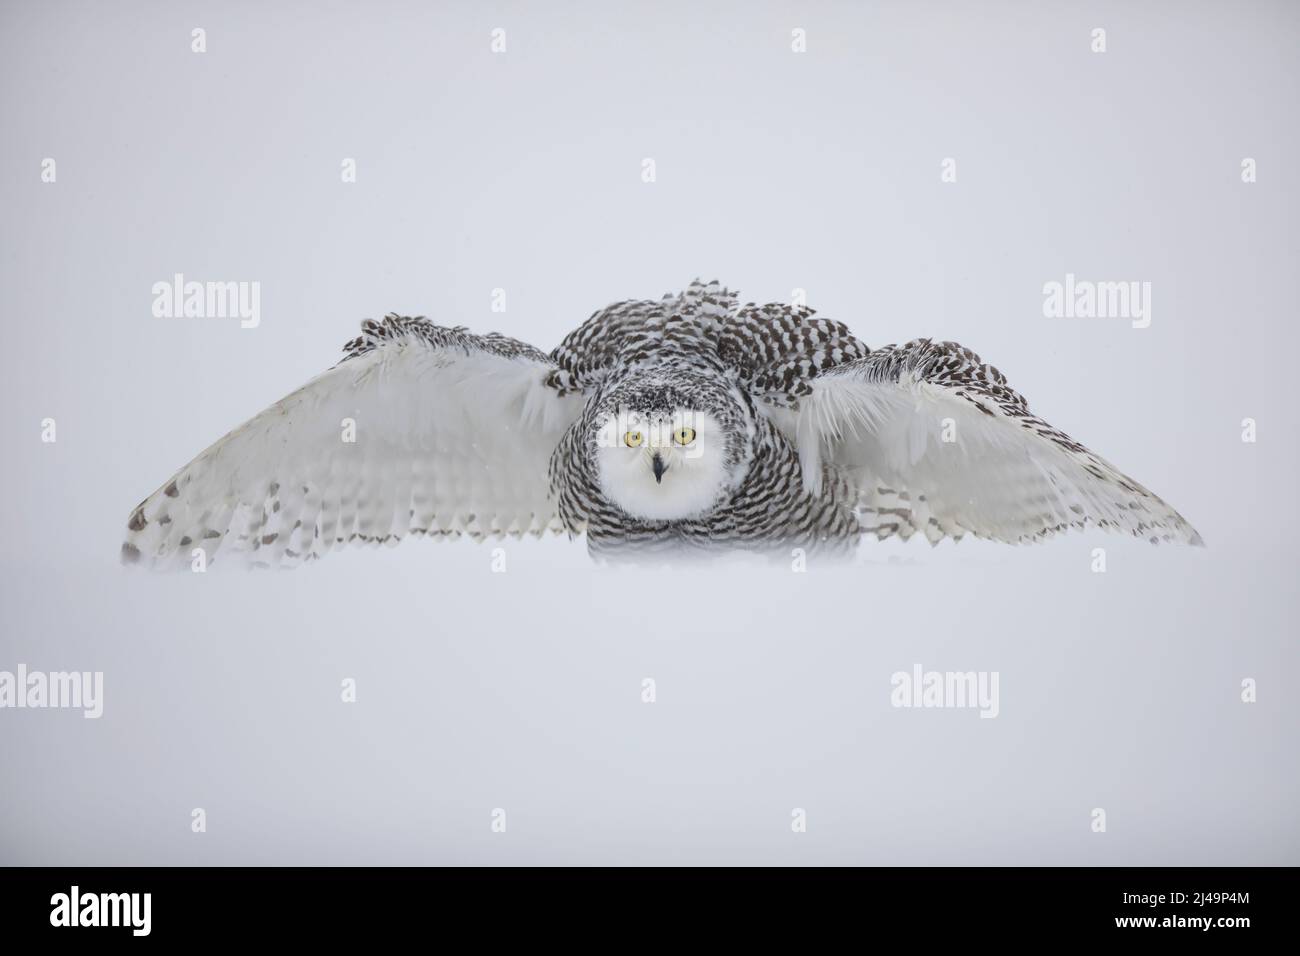 Schnee-Eule, snowy owl, Bubo scandiacus Stock Photo